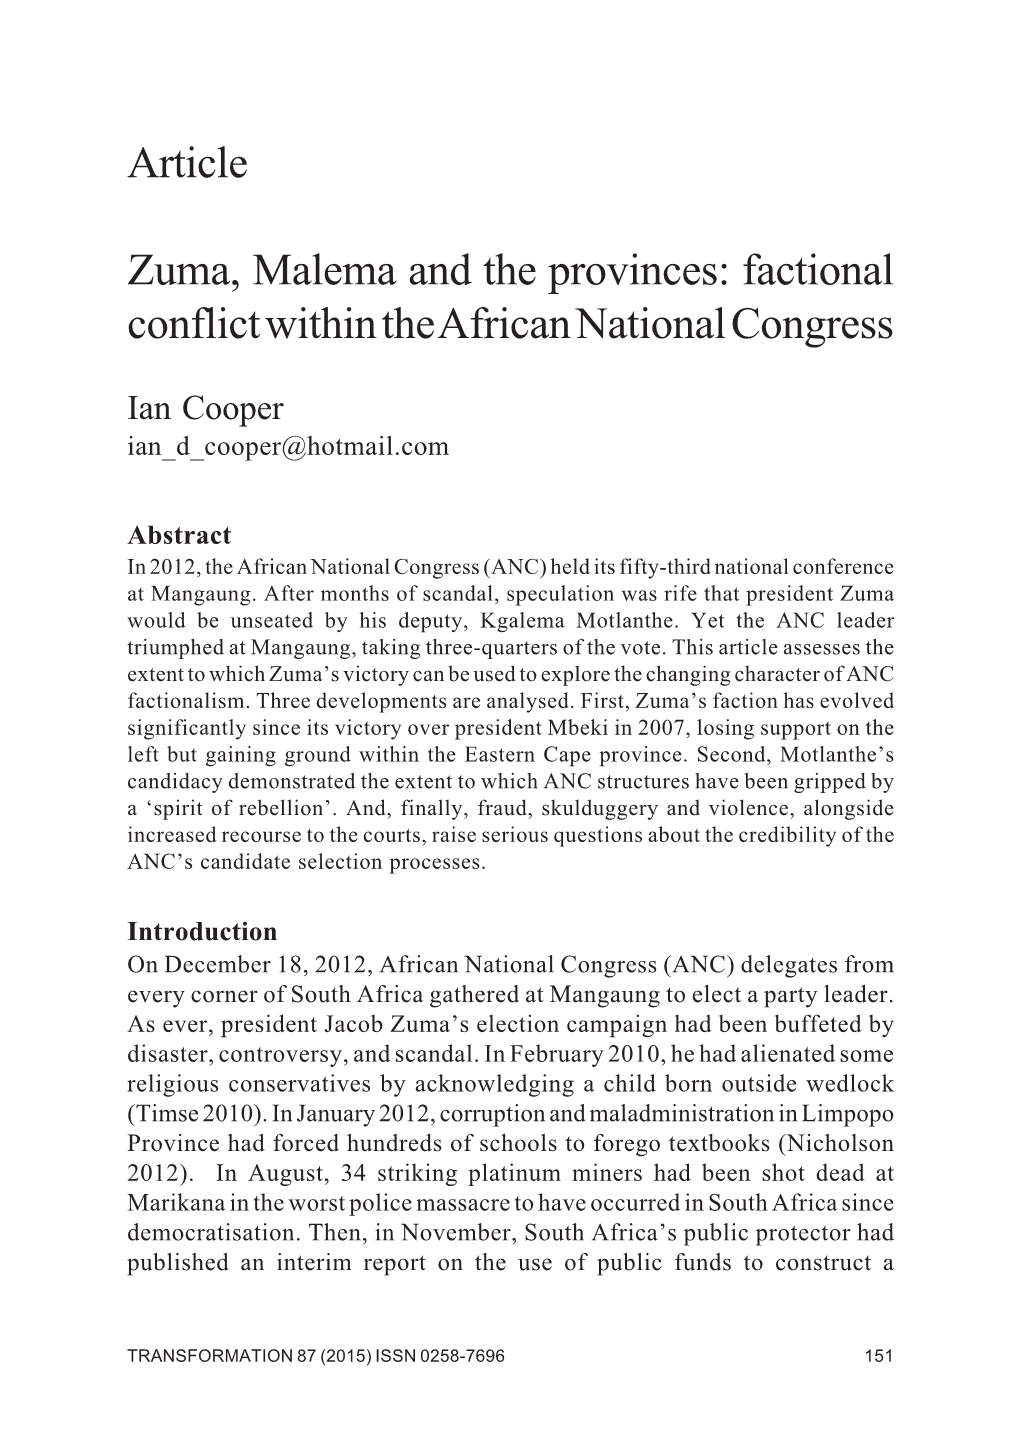 Article Zuma, Malema and the Provinces